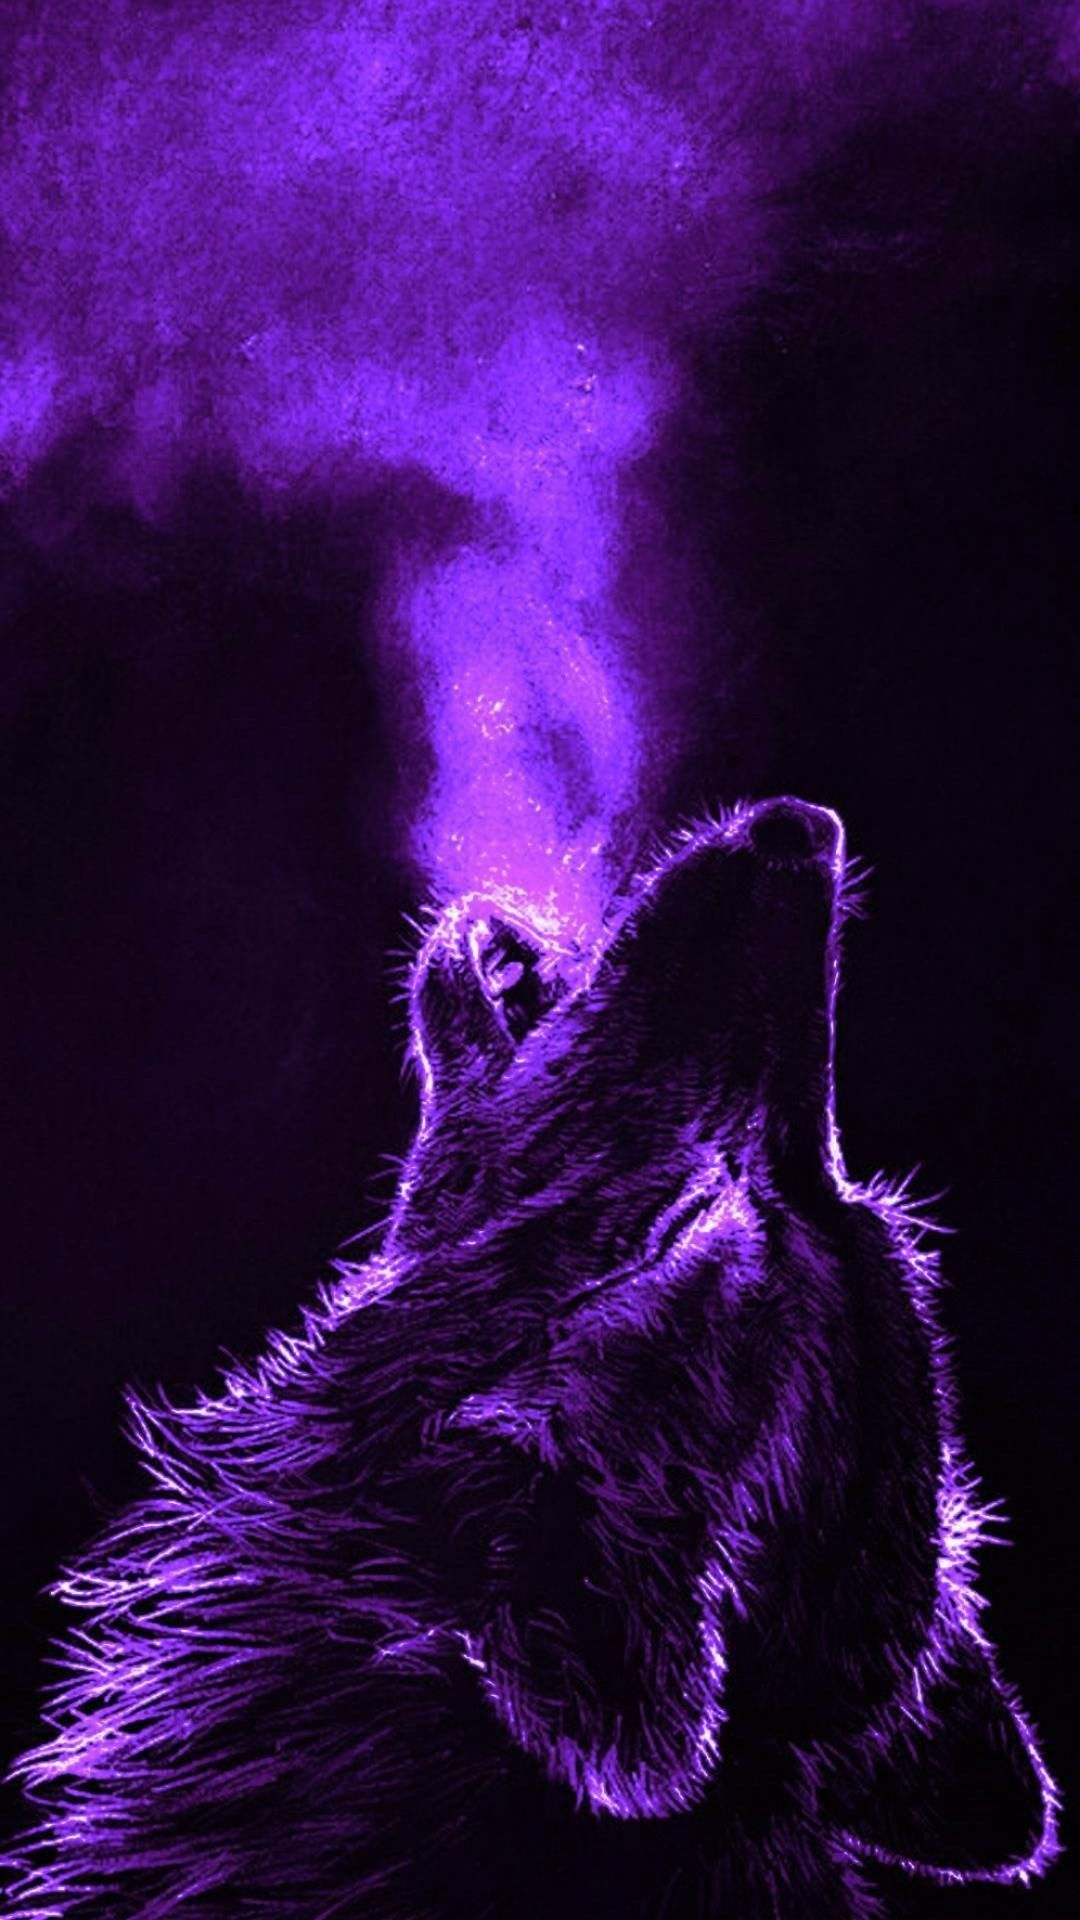  Wölfe Hintergrundbild 1080x1920. Purple wolf. Wolf wallpaper, Purple wallpaper iphone, Dark purple wallpaper